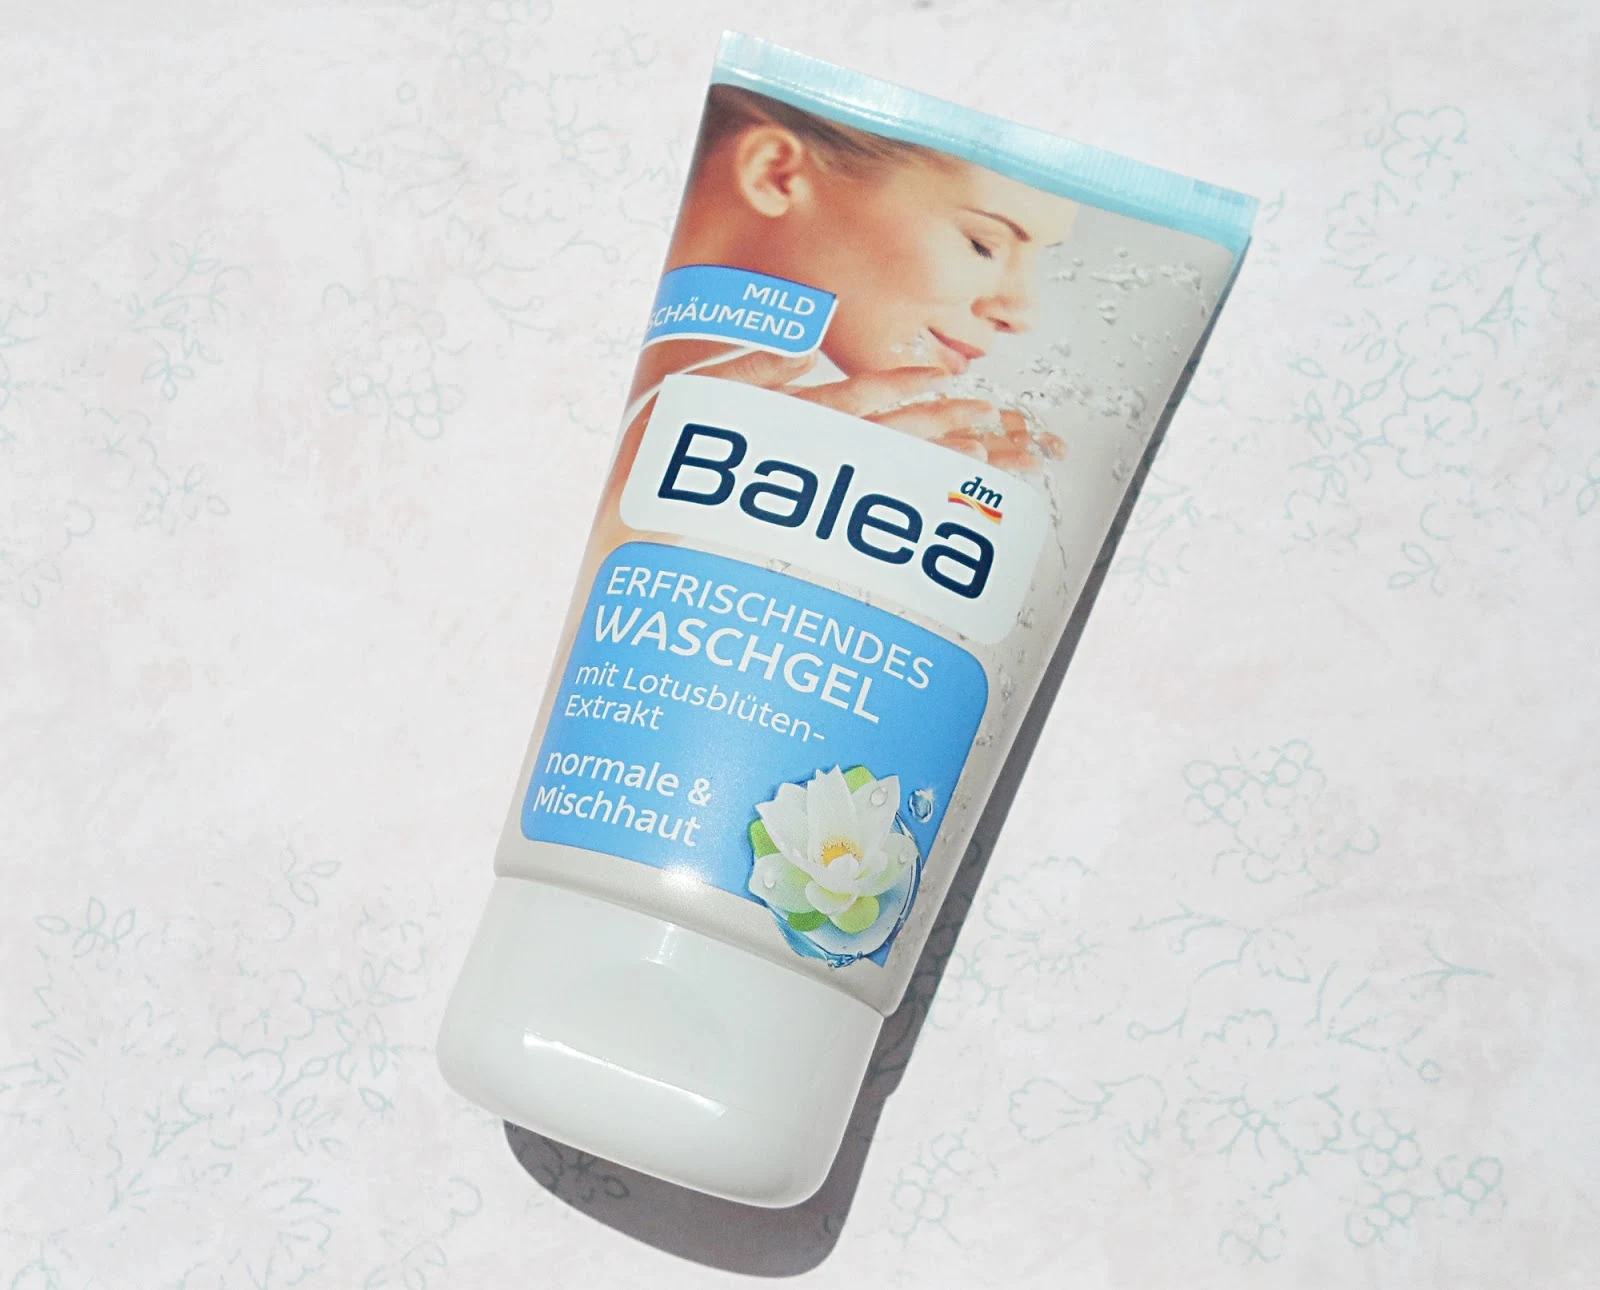 liz breygel balea dm skin care Balea Erfrischendes Waschgel review vegan beauty blog